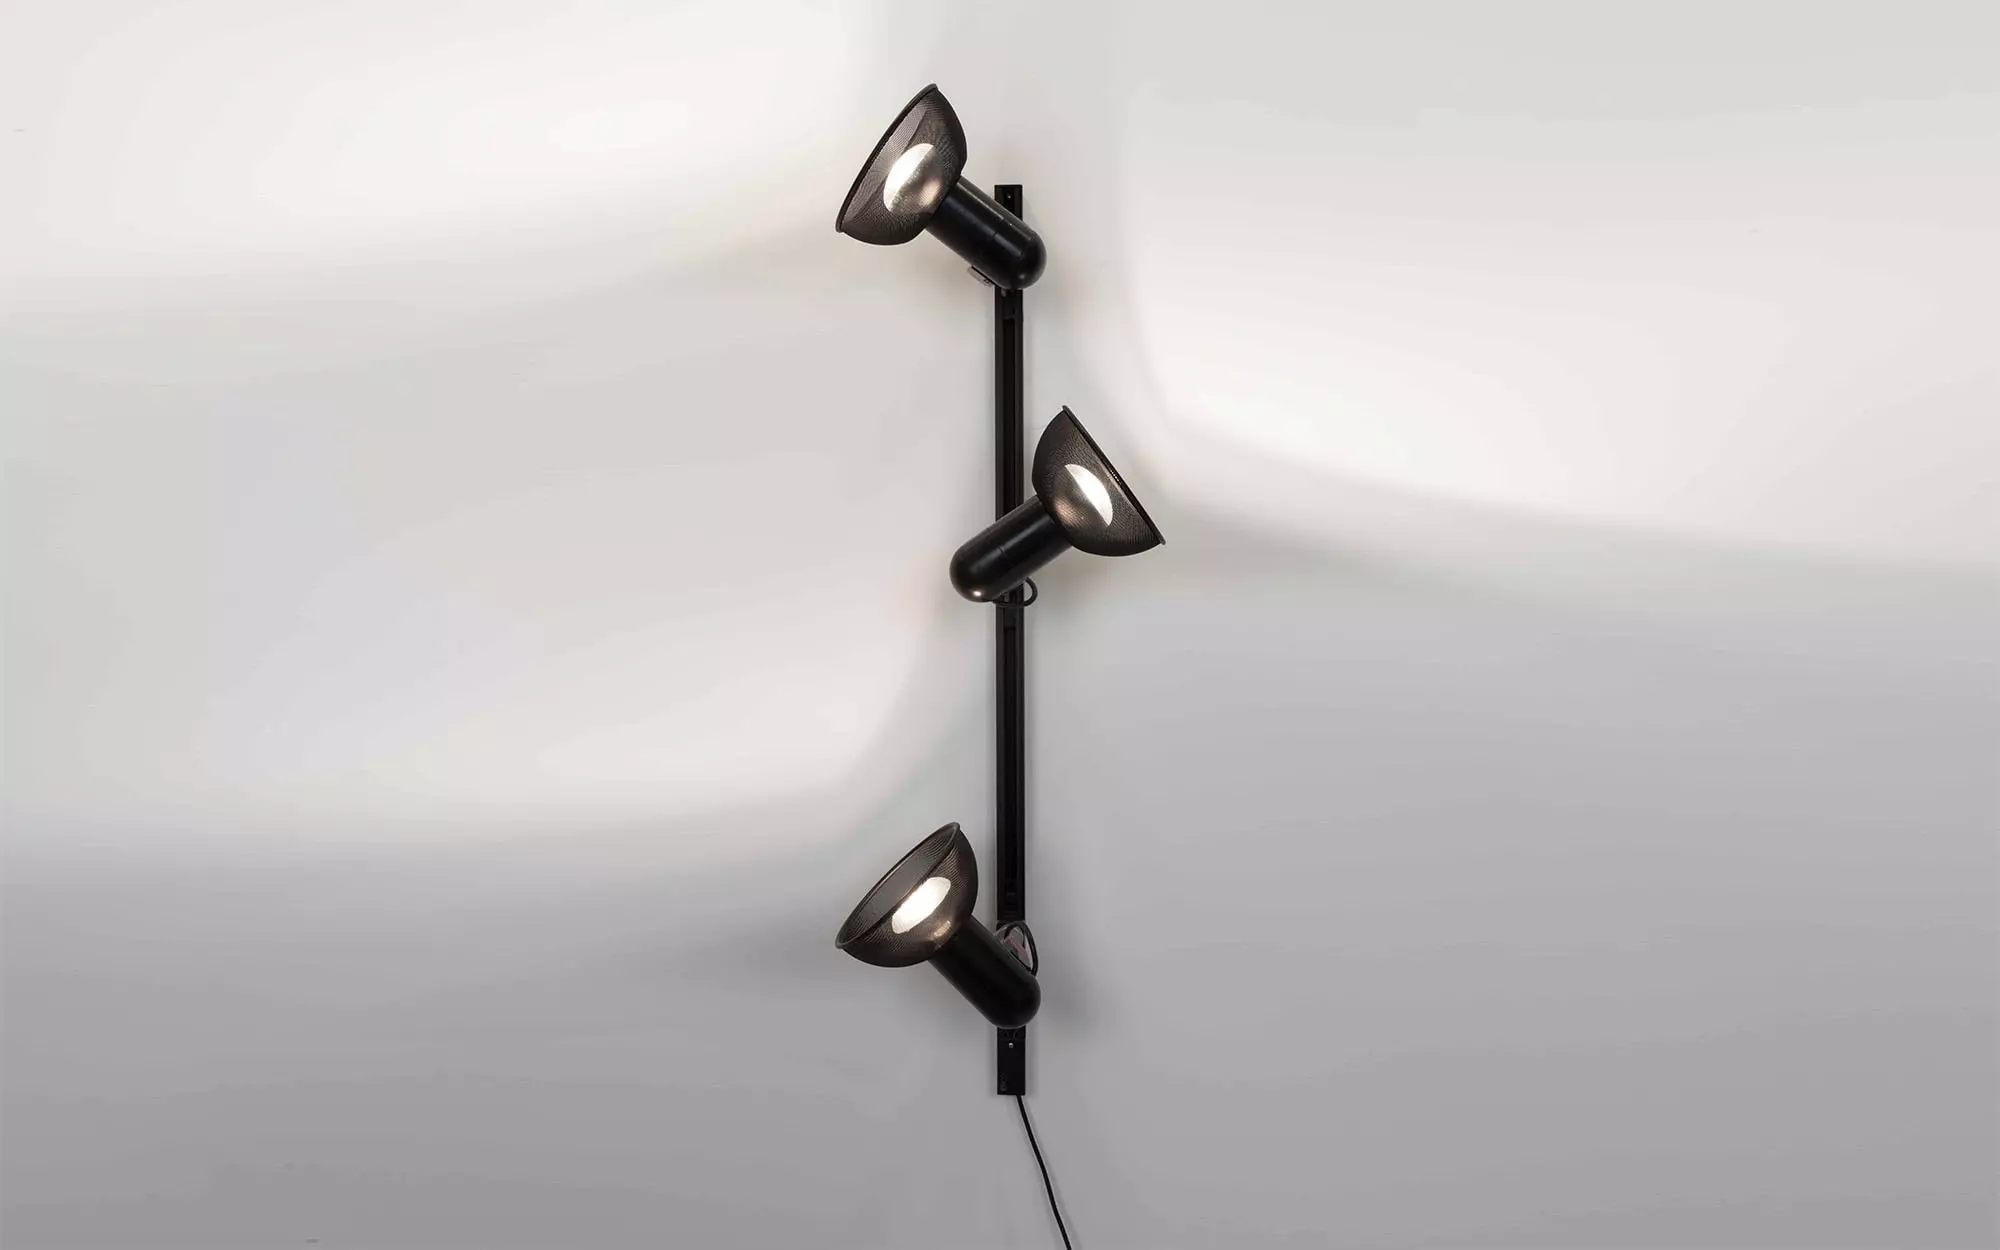 Spot - Roger Tallon  - Wall light - Galerie kreo